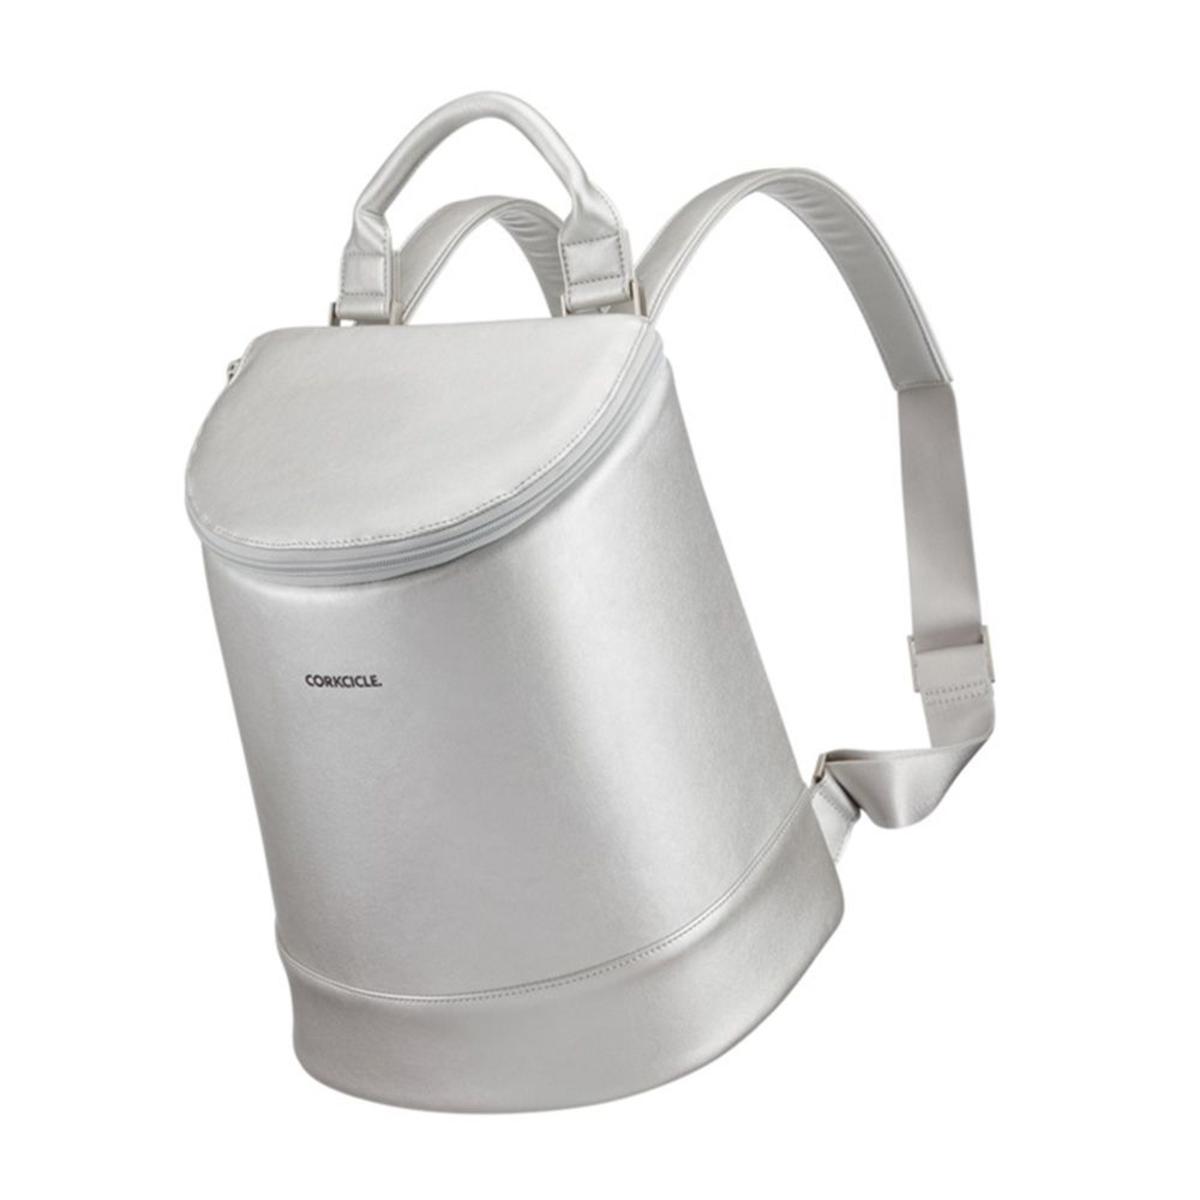 Corkcicle Eola Bucket Cooler Bag - Grey Camo